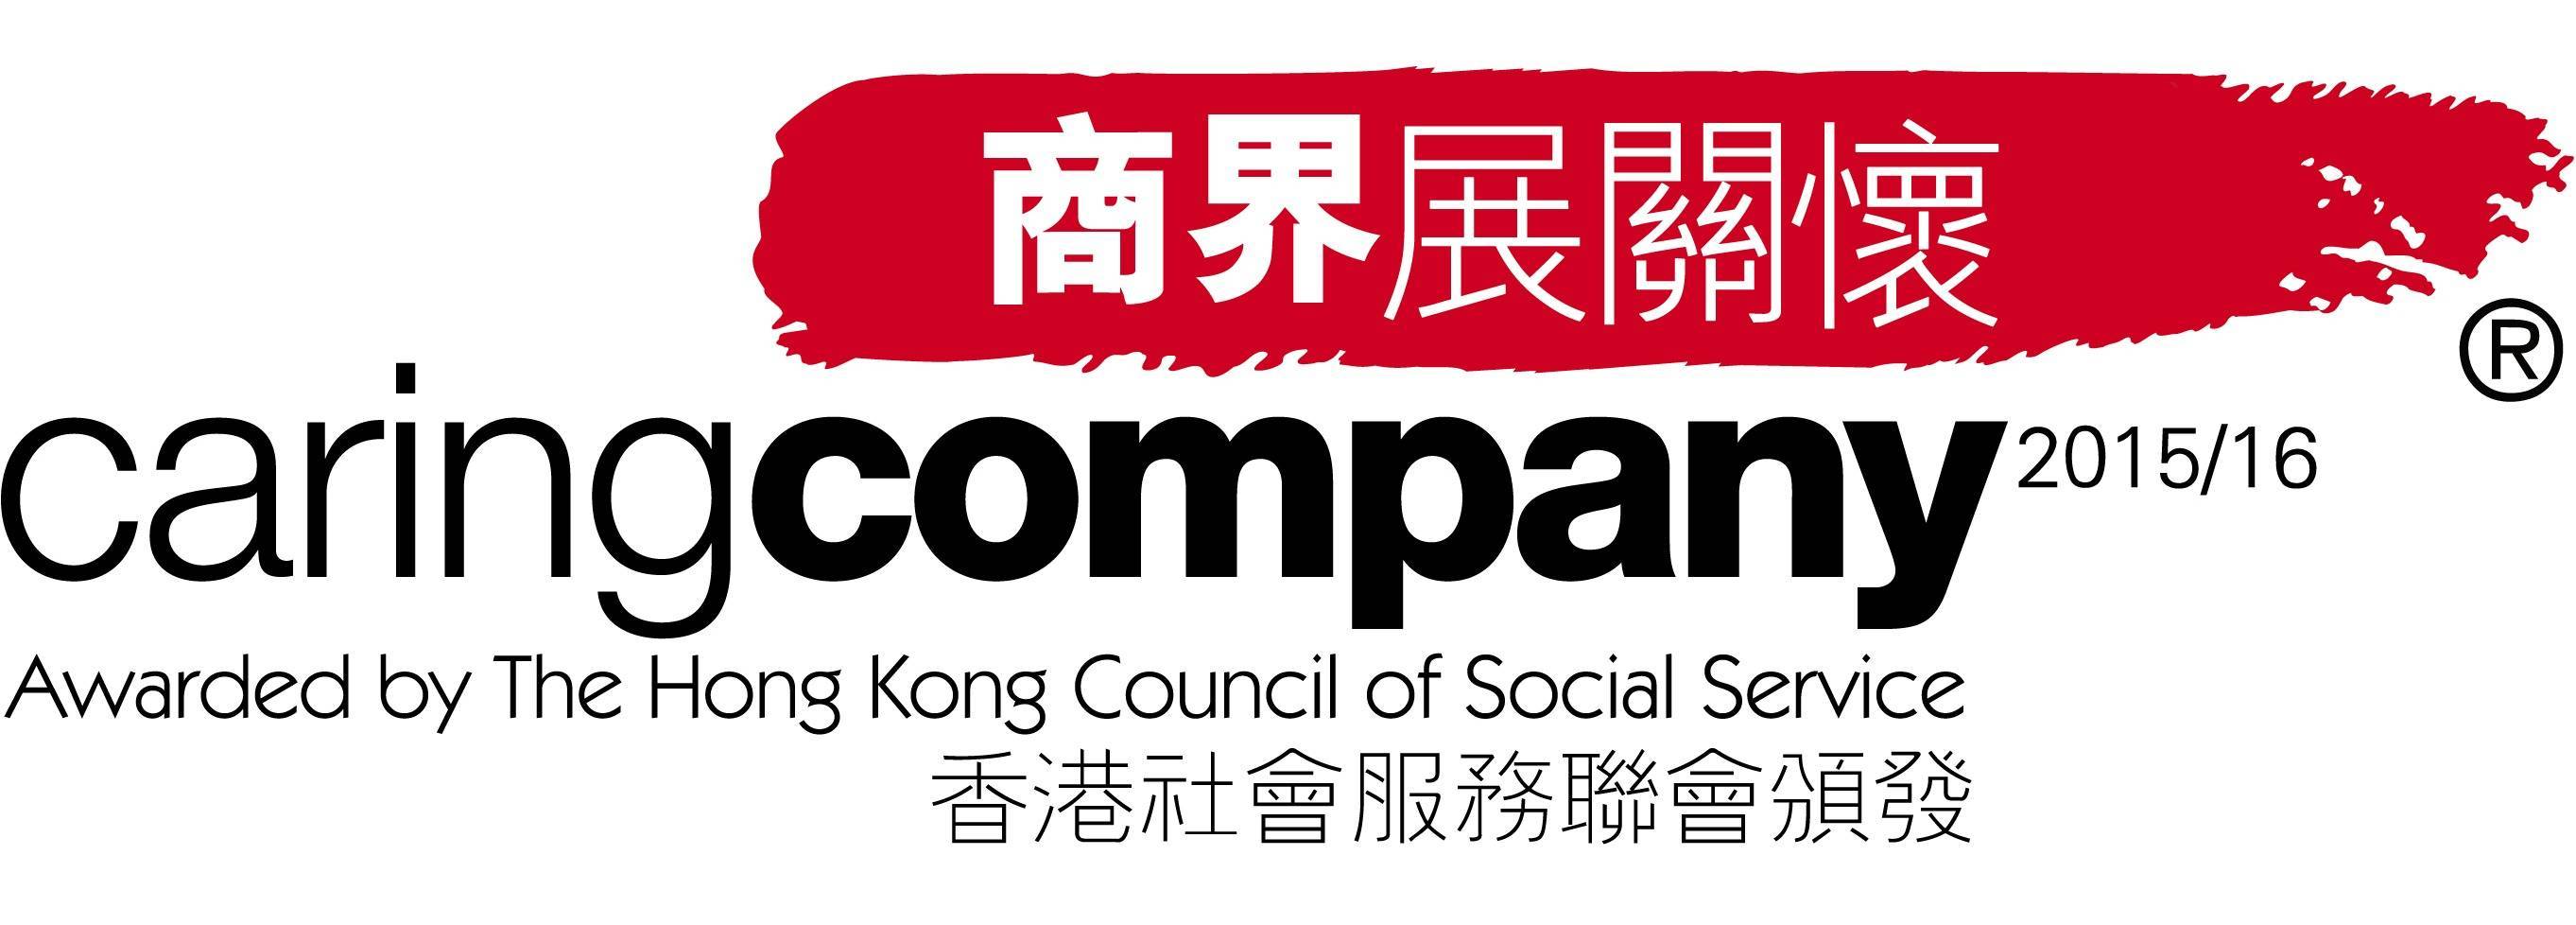  Hong Kong Council of Social Services